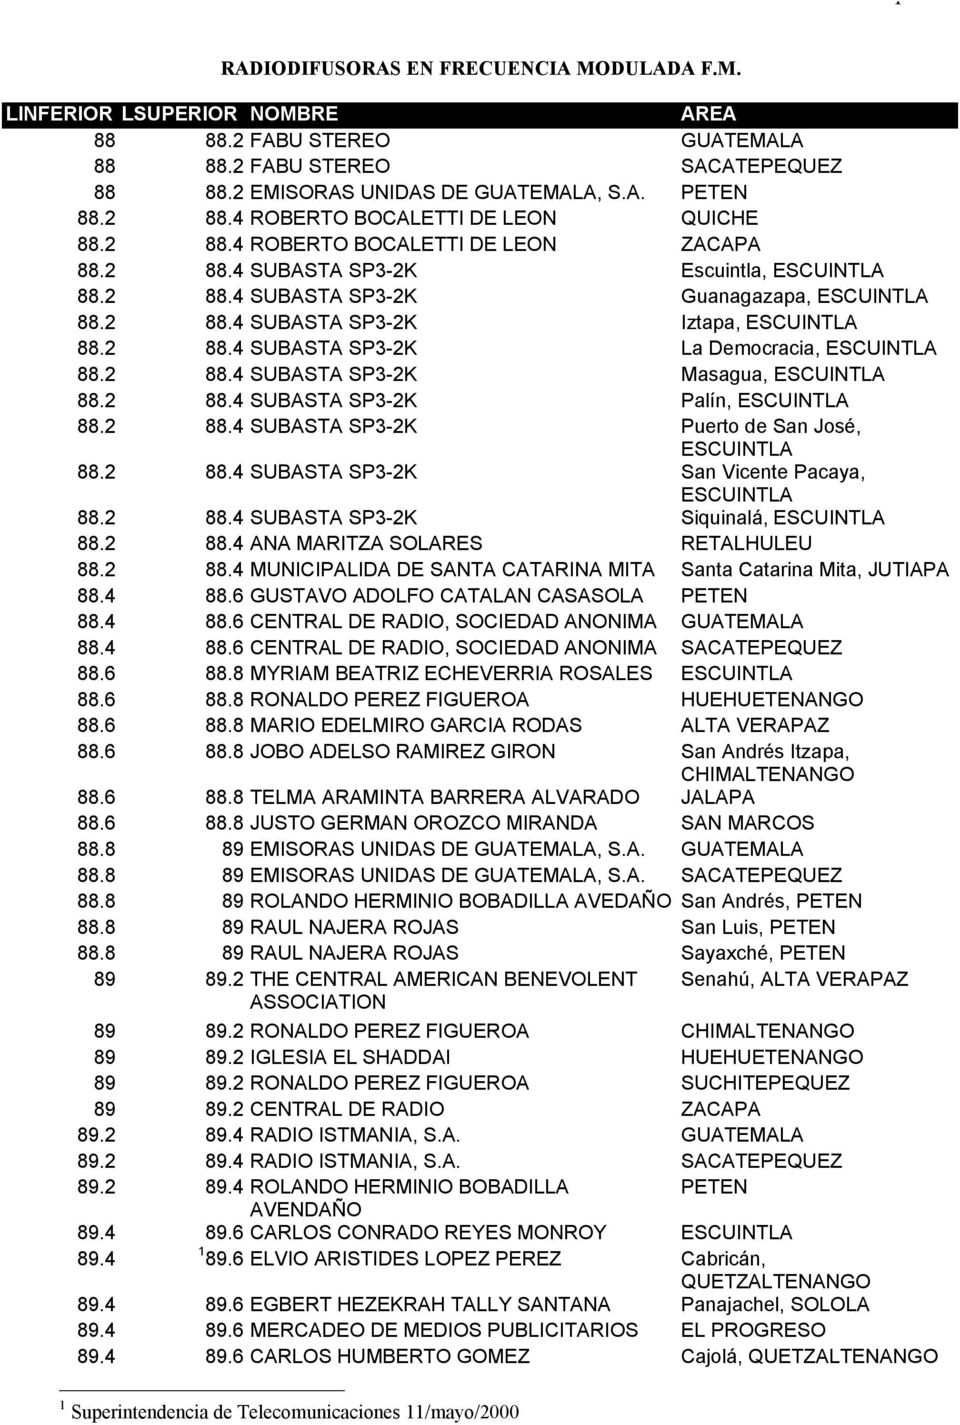 2 88.4 SUBASTA SP3-2K Masagua, 88.2 88.4 SUBASTA SP3-2K Palín, 88.2 88.4 SUBASTA SP3-2K Puerto de San José, 88.2 88.4 SUBASTA SP3-2K San Vicente Pacaya, 88.2 88.4 SUBASTA SP3-2K Siquinalá, 88.2 88.4 ANA MARITZA SOLARES RETALHULEU 88.